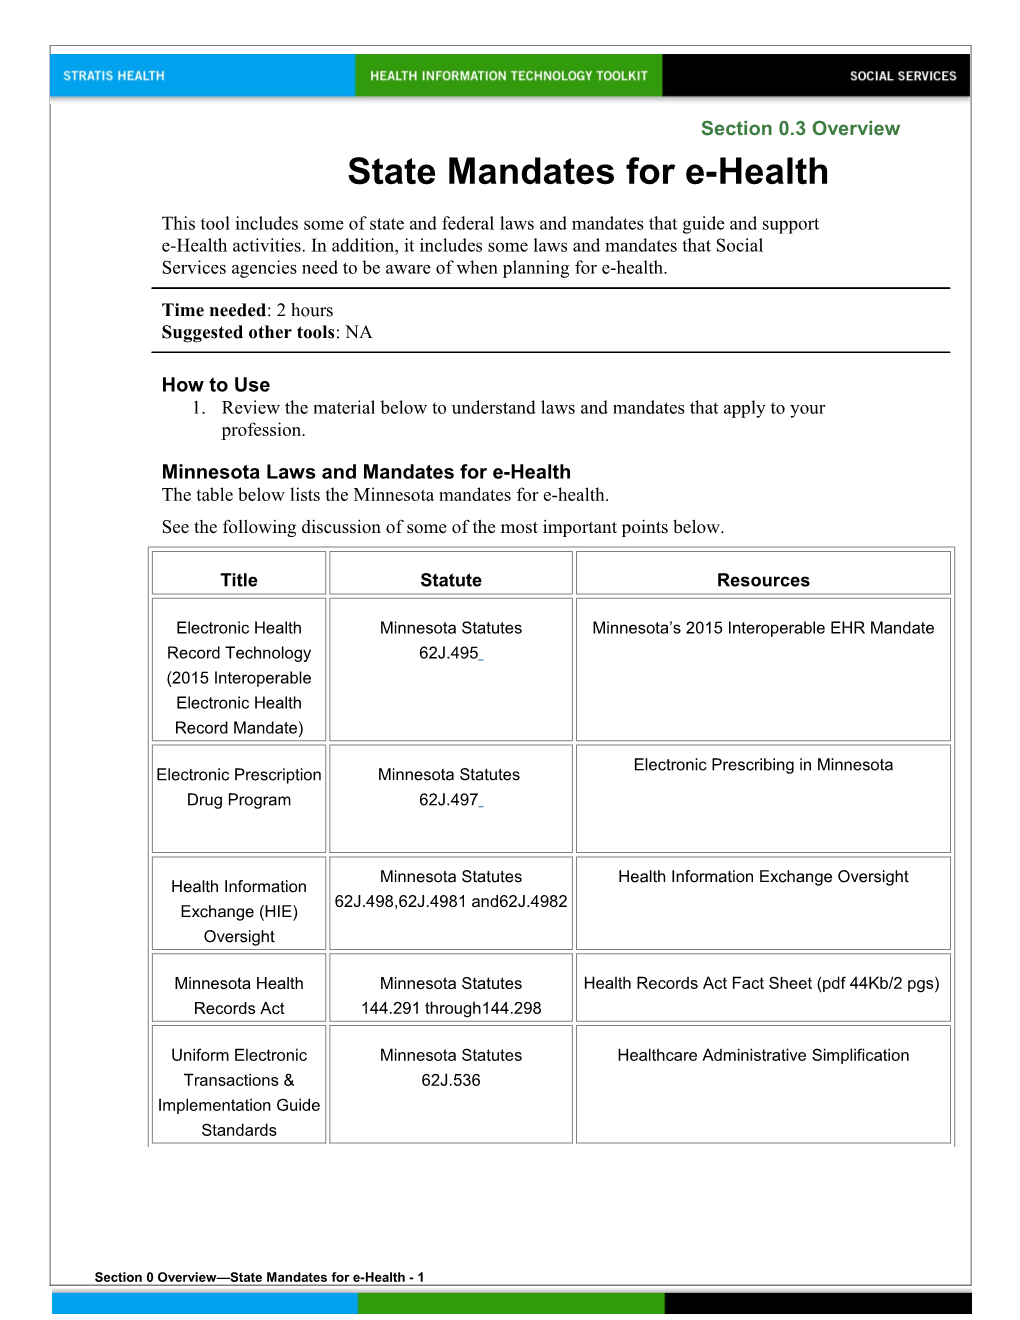 0 State Mandates for E-Health